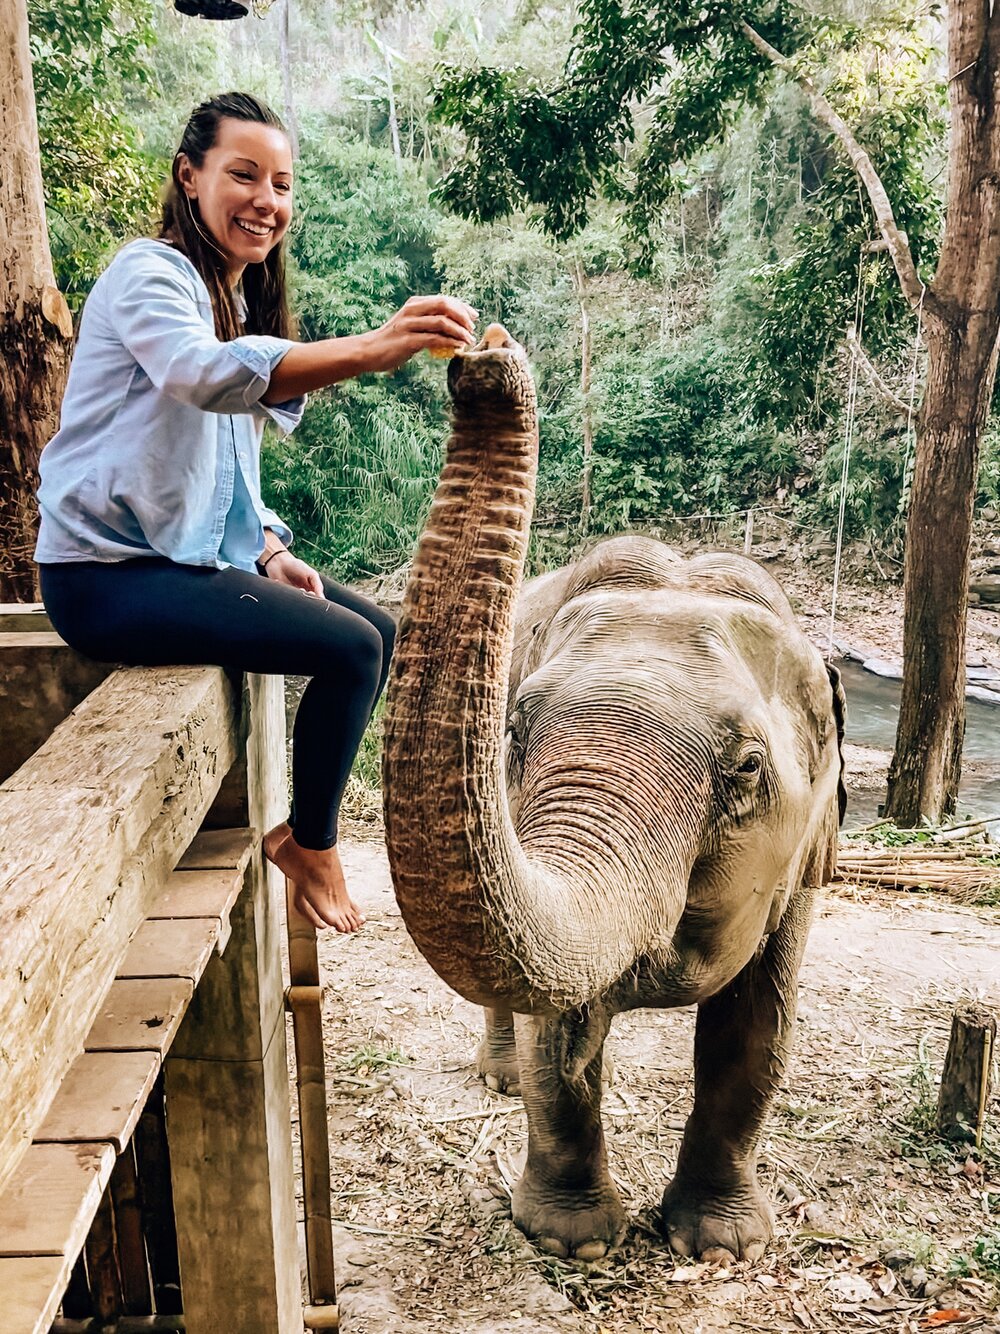 Feeding elephants best Instagram photos Thailand